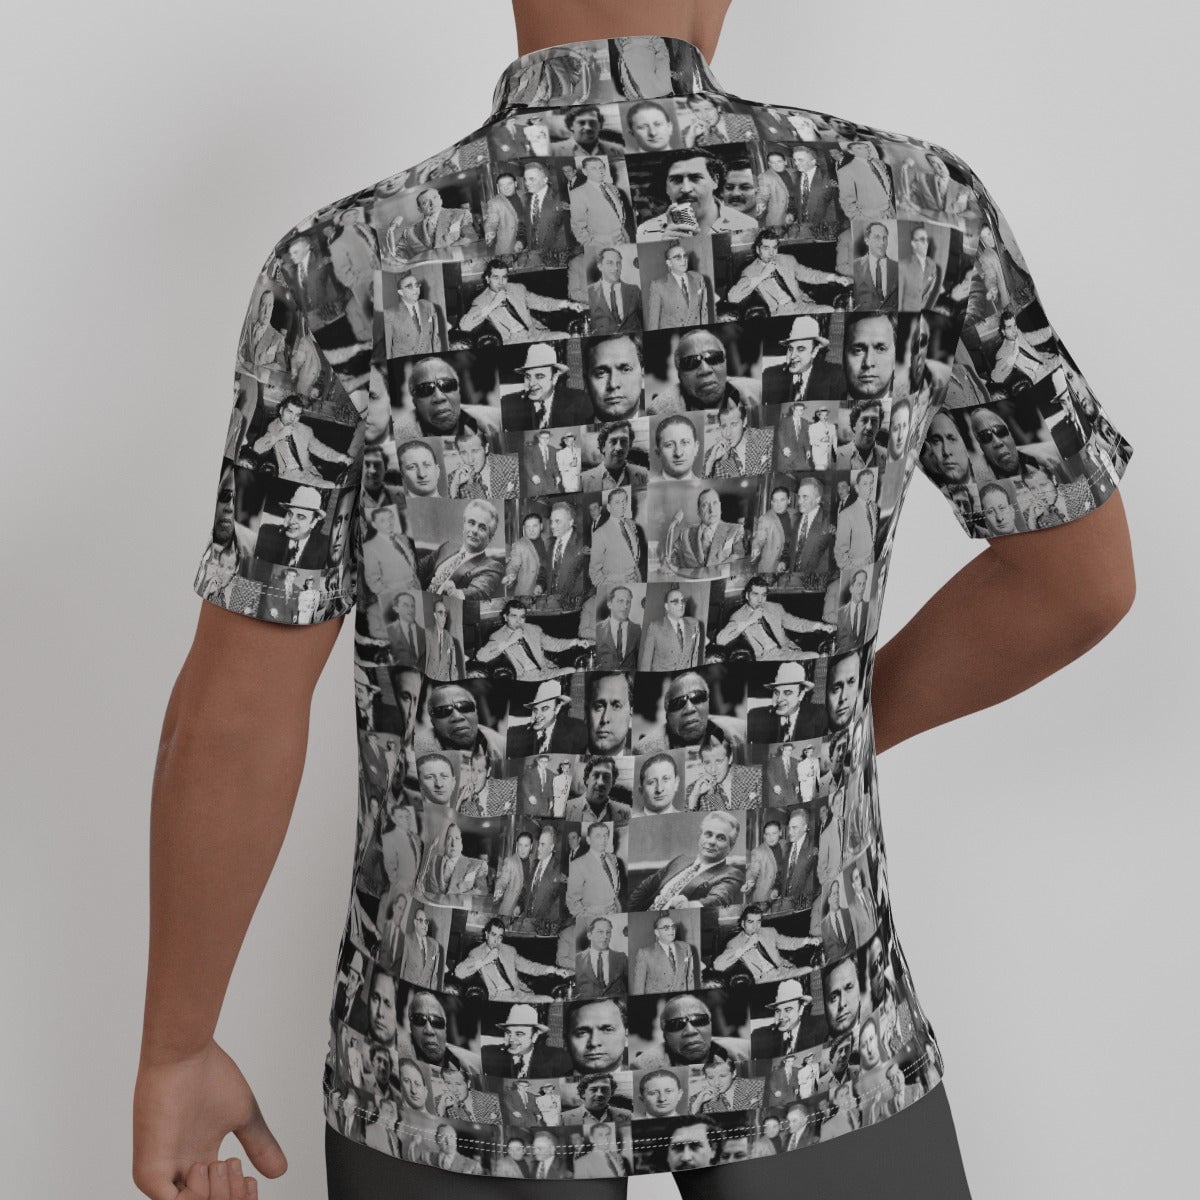 Das beste Gangster-Shirt aller Zeiten